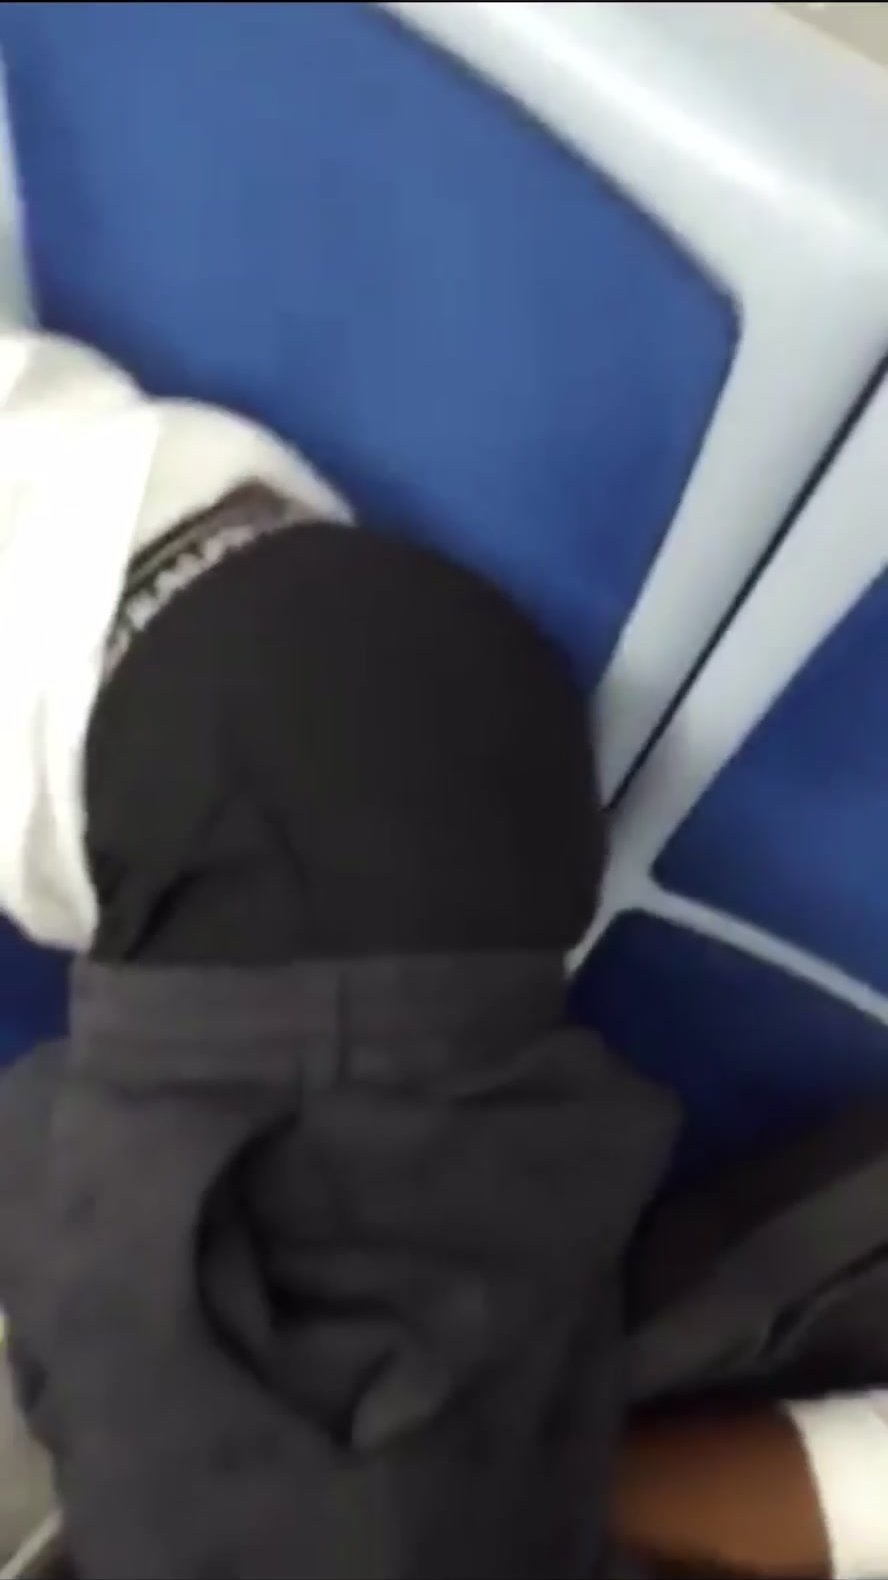 Sleeping sagger gets groped  on bus